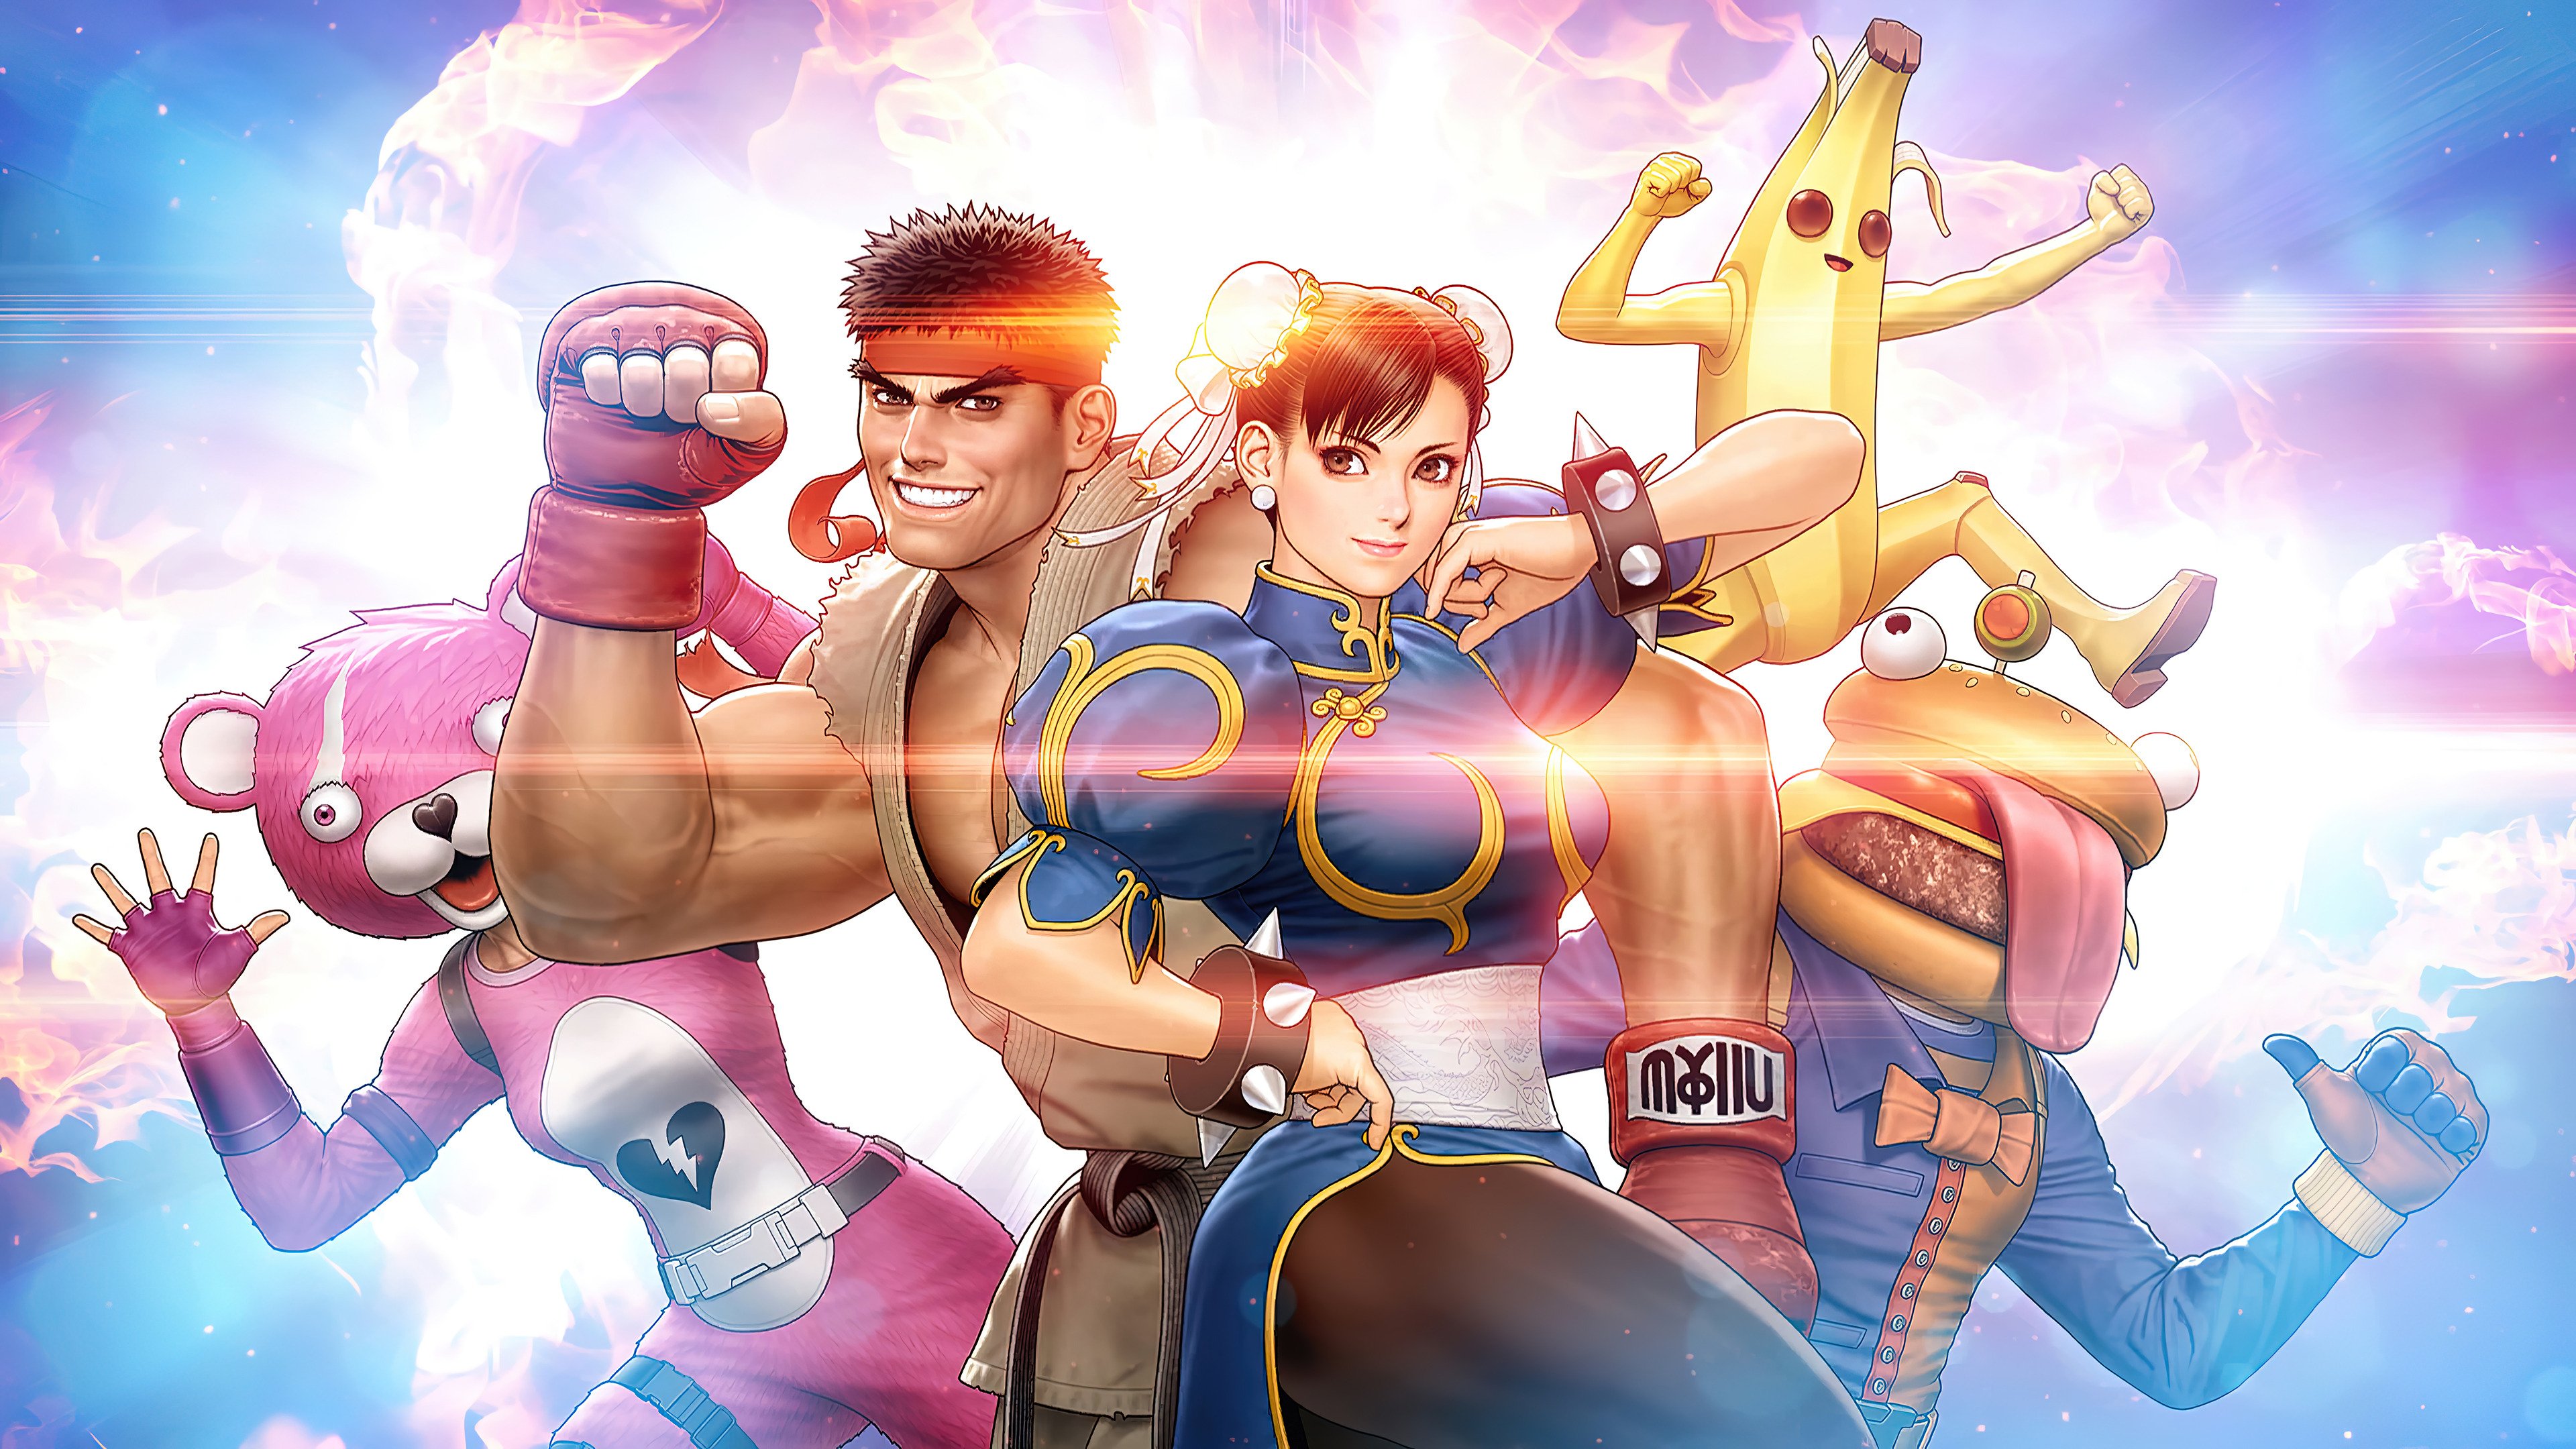 Video games Street Fighter men Ryu fantasy art wallpaper  1920x1080   346161  WallpaperUP